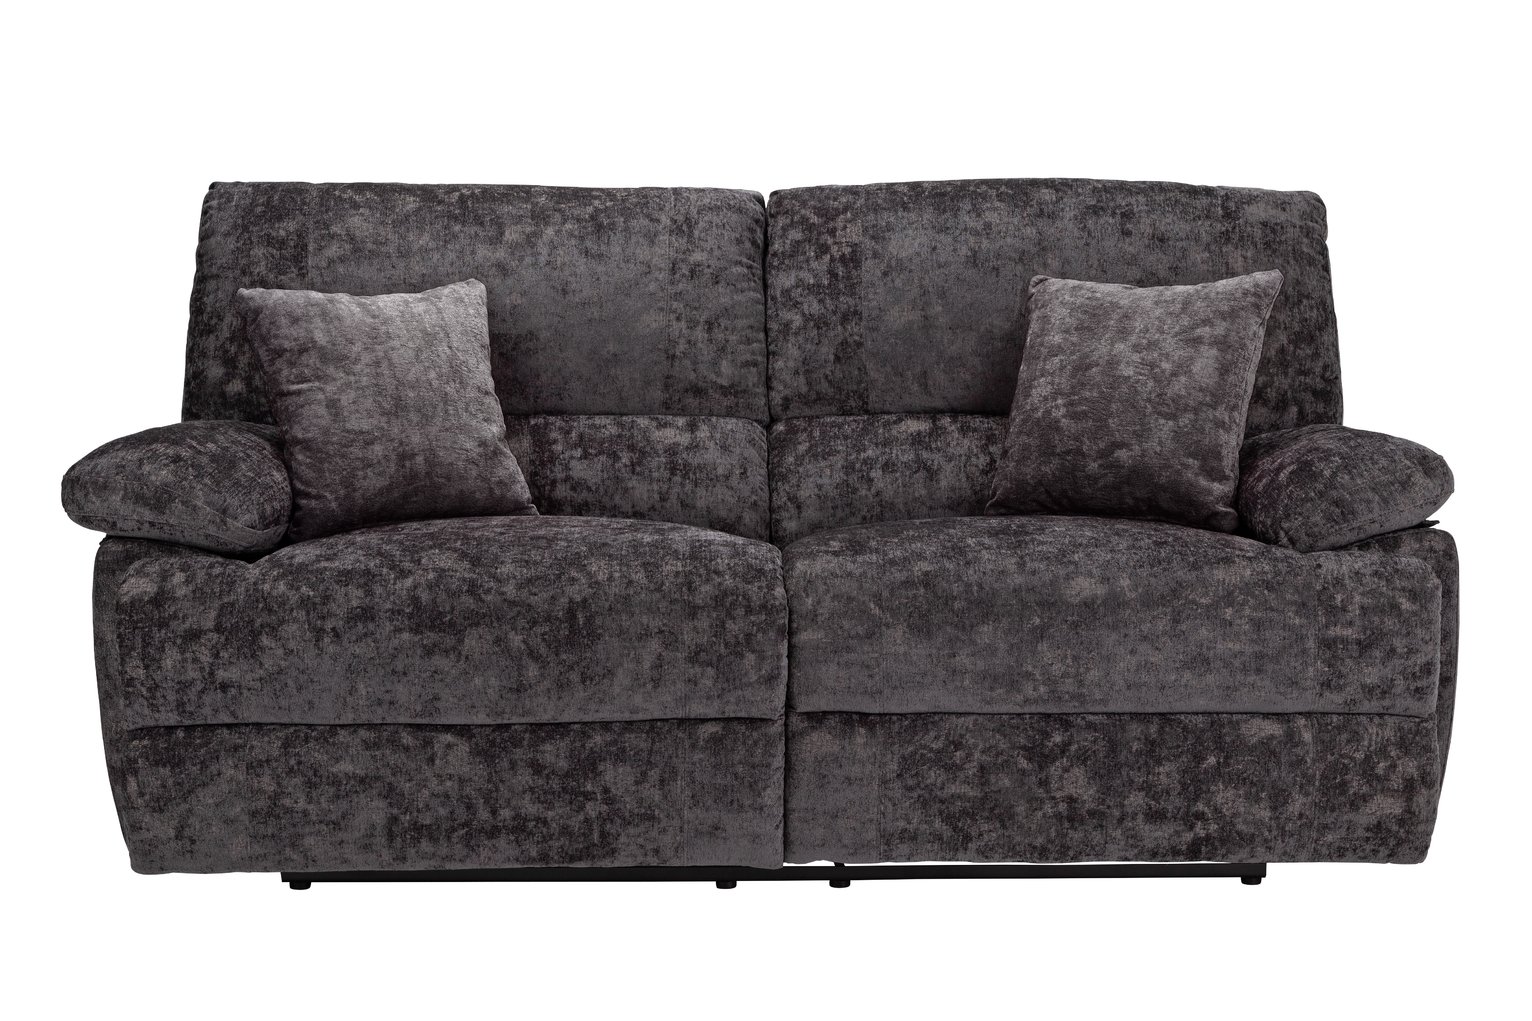 Argos Home Carmilla 3 Seater Fabric Recliner Sofa - Charcoal